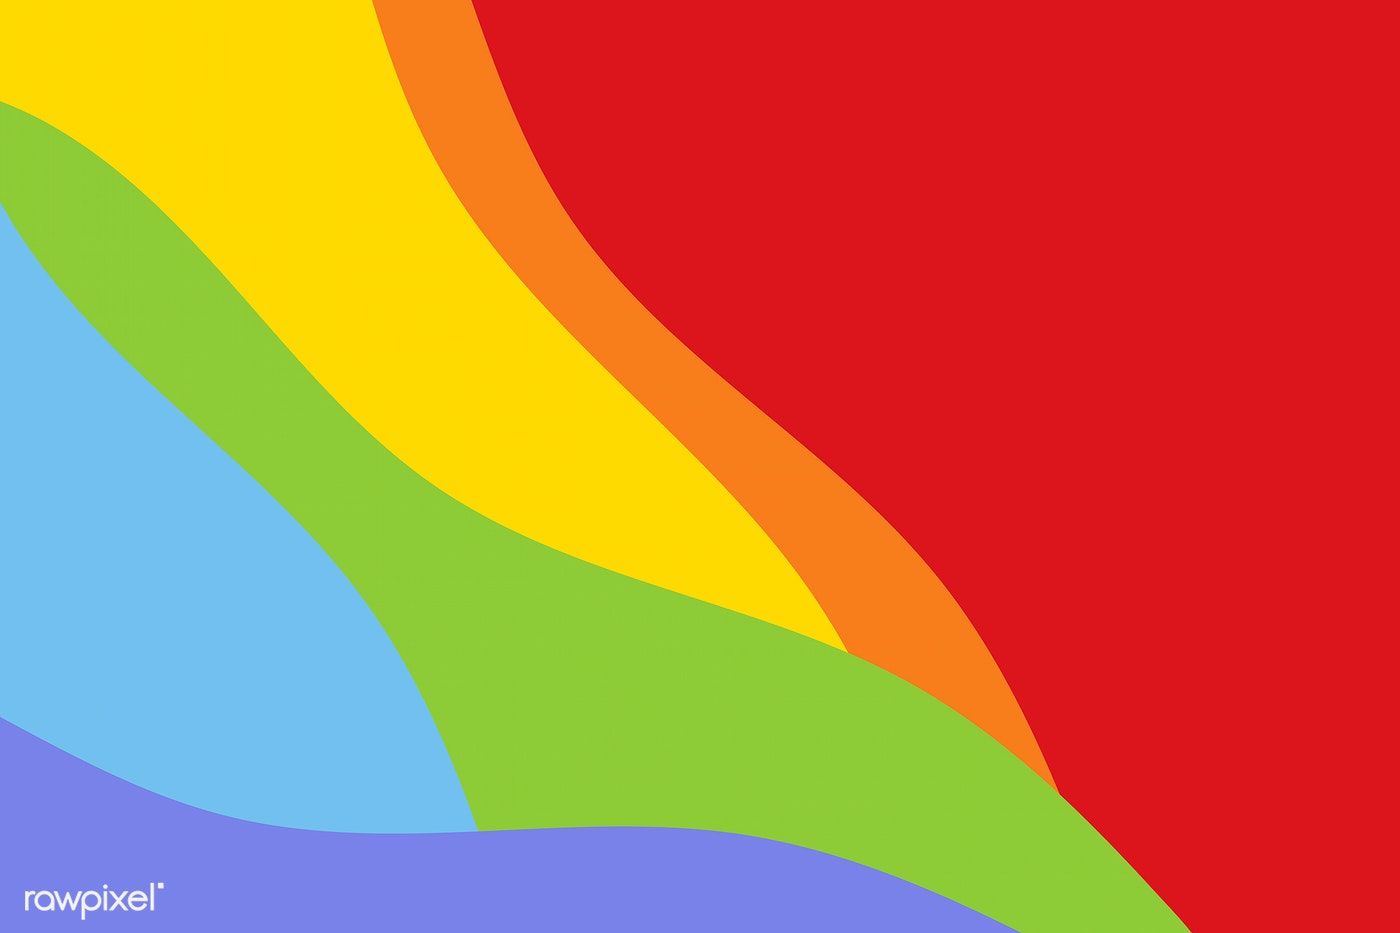 Download premium vector of Support LGBTQ pride rainbow background